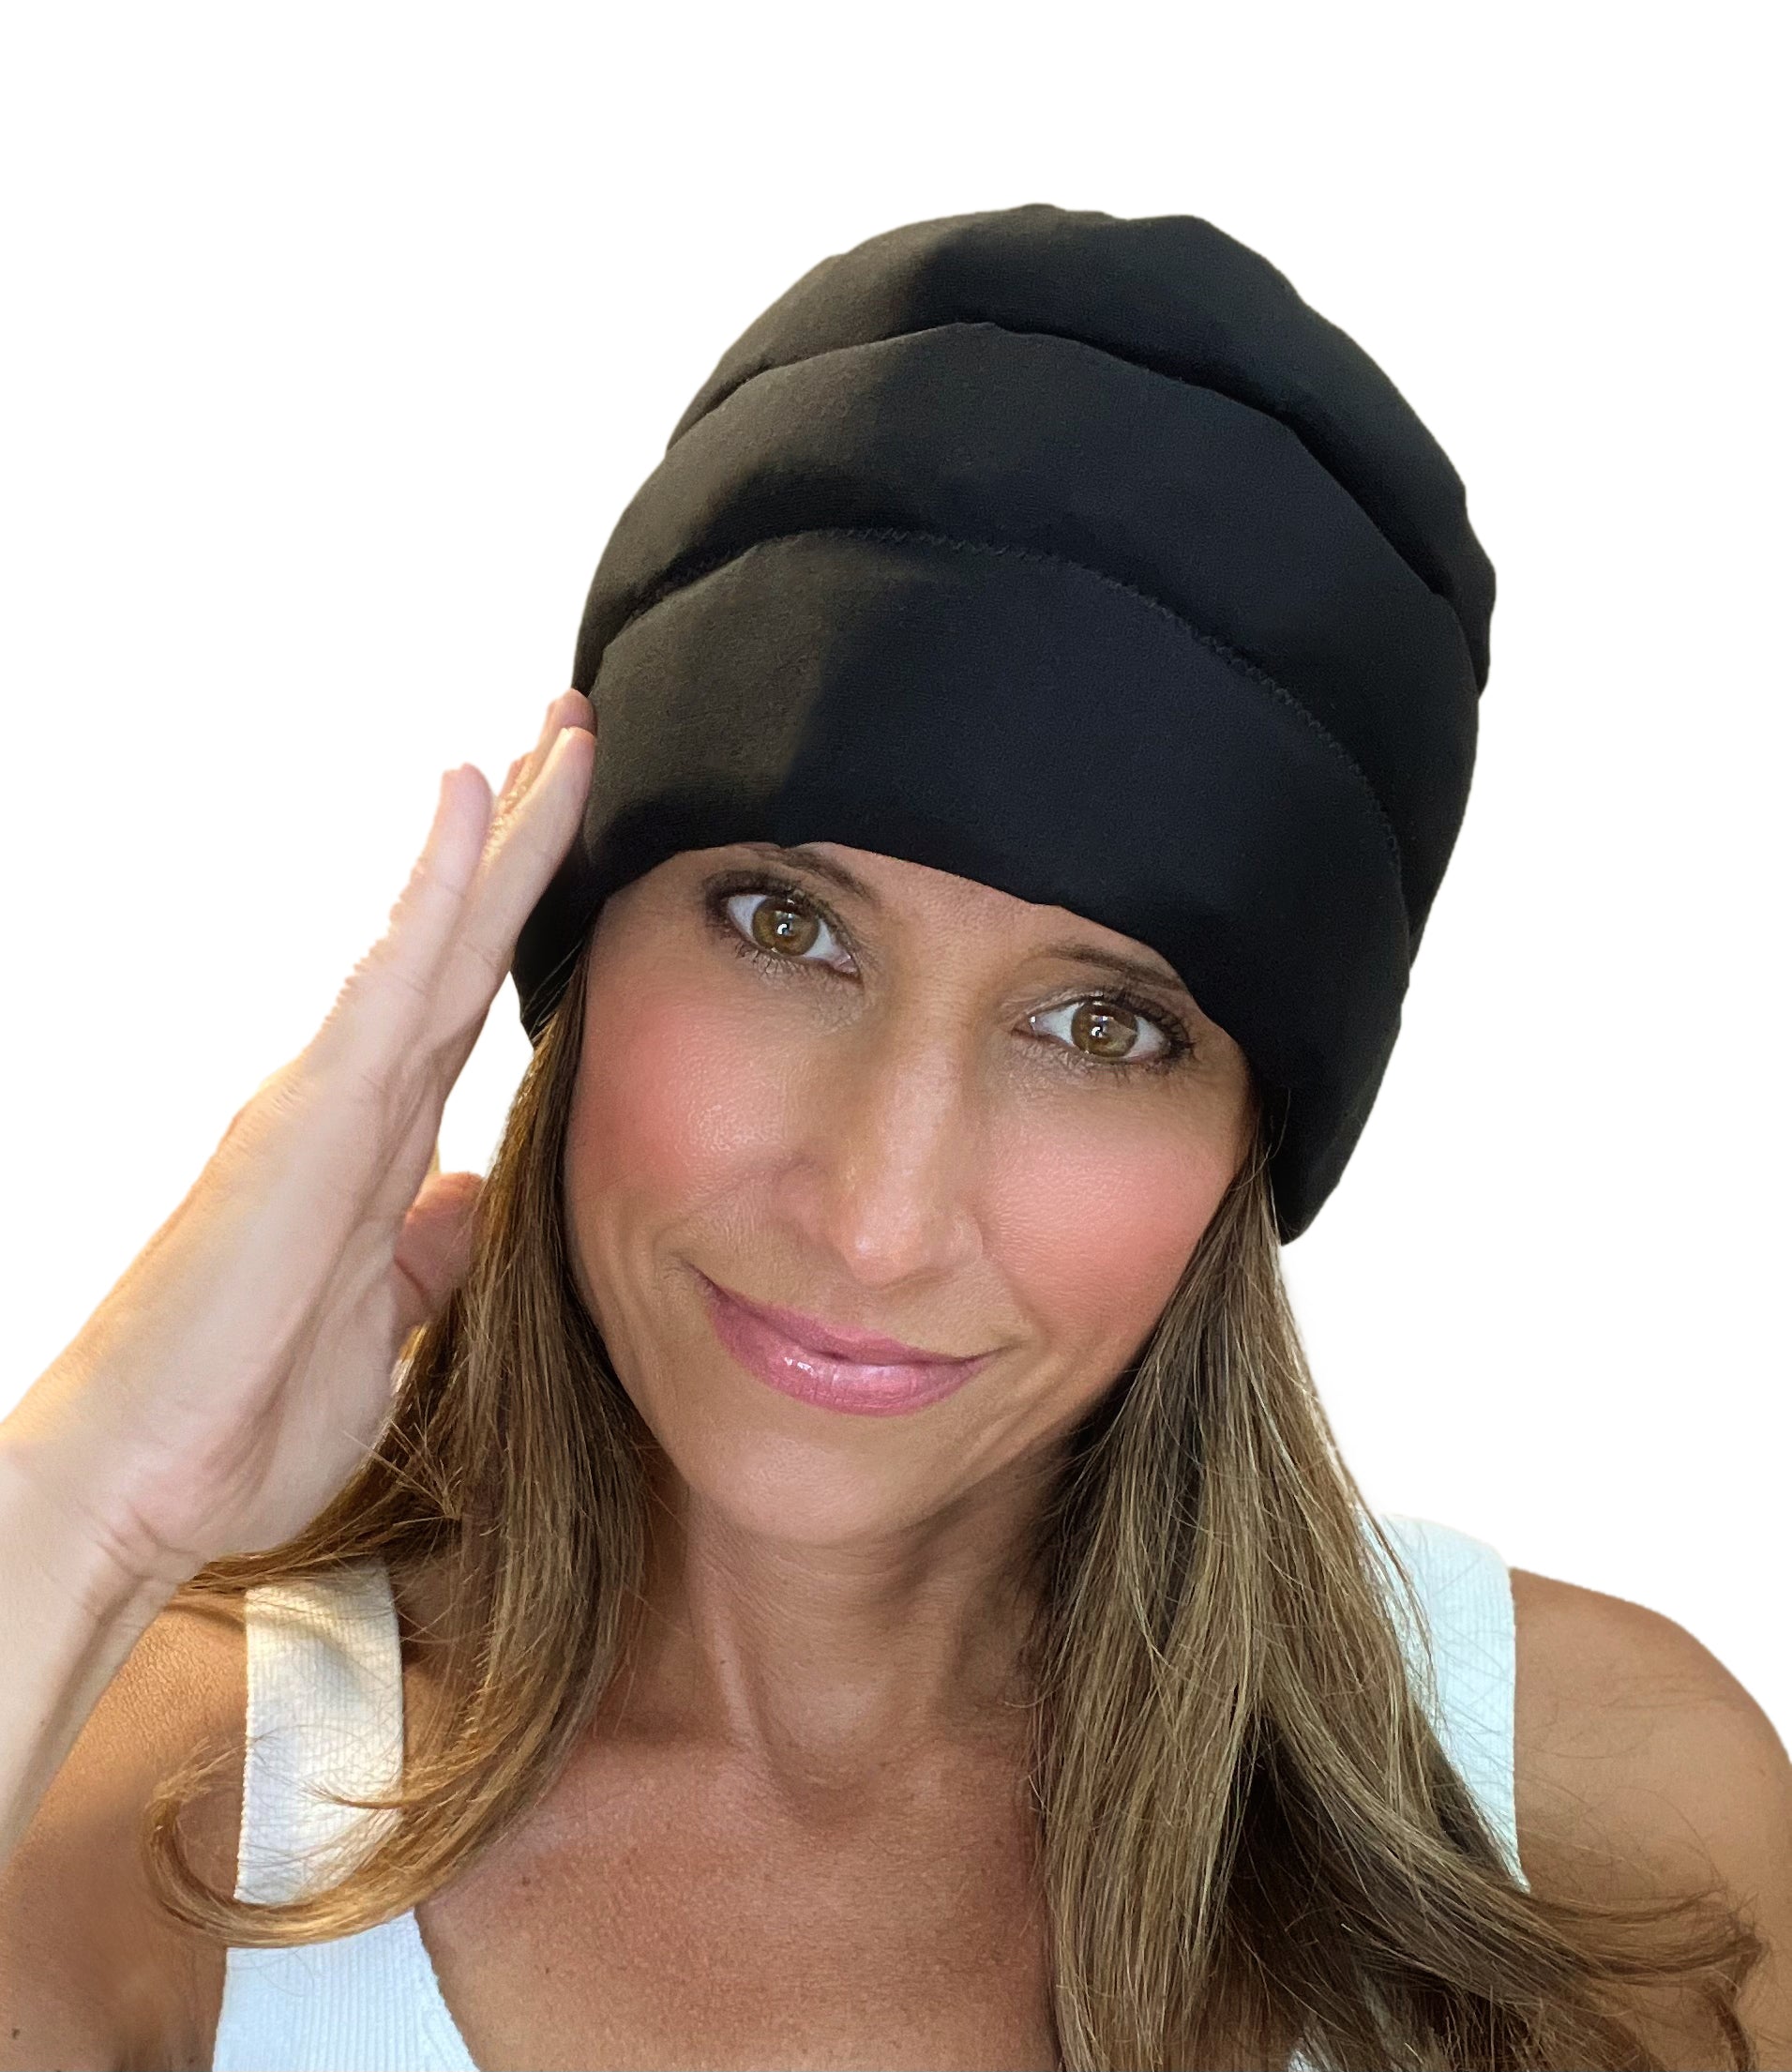 The Headache Hat (Standard Size): The Original Headache Hat for Migraine Relief